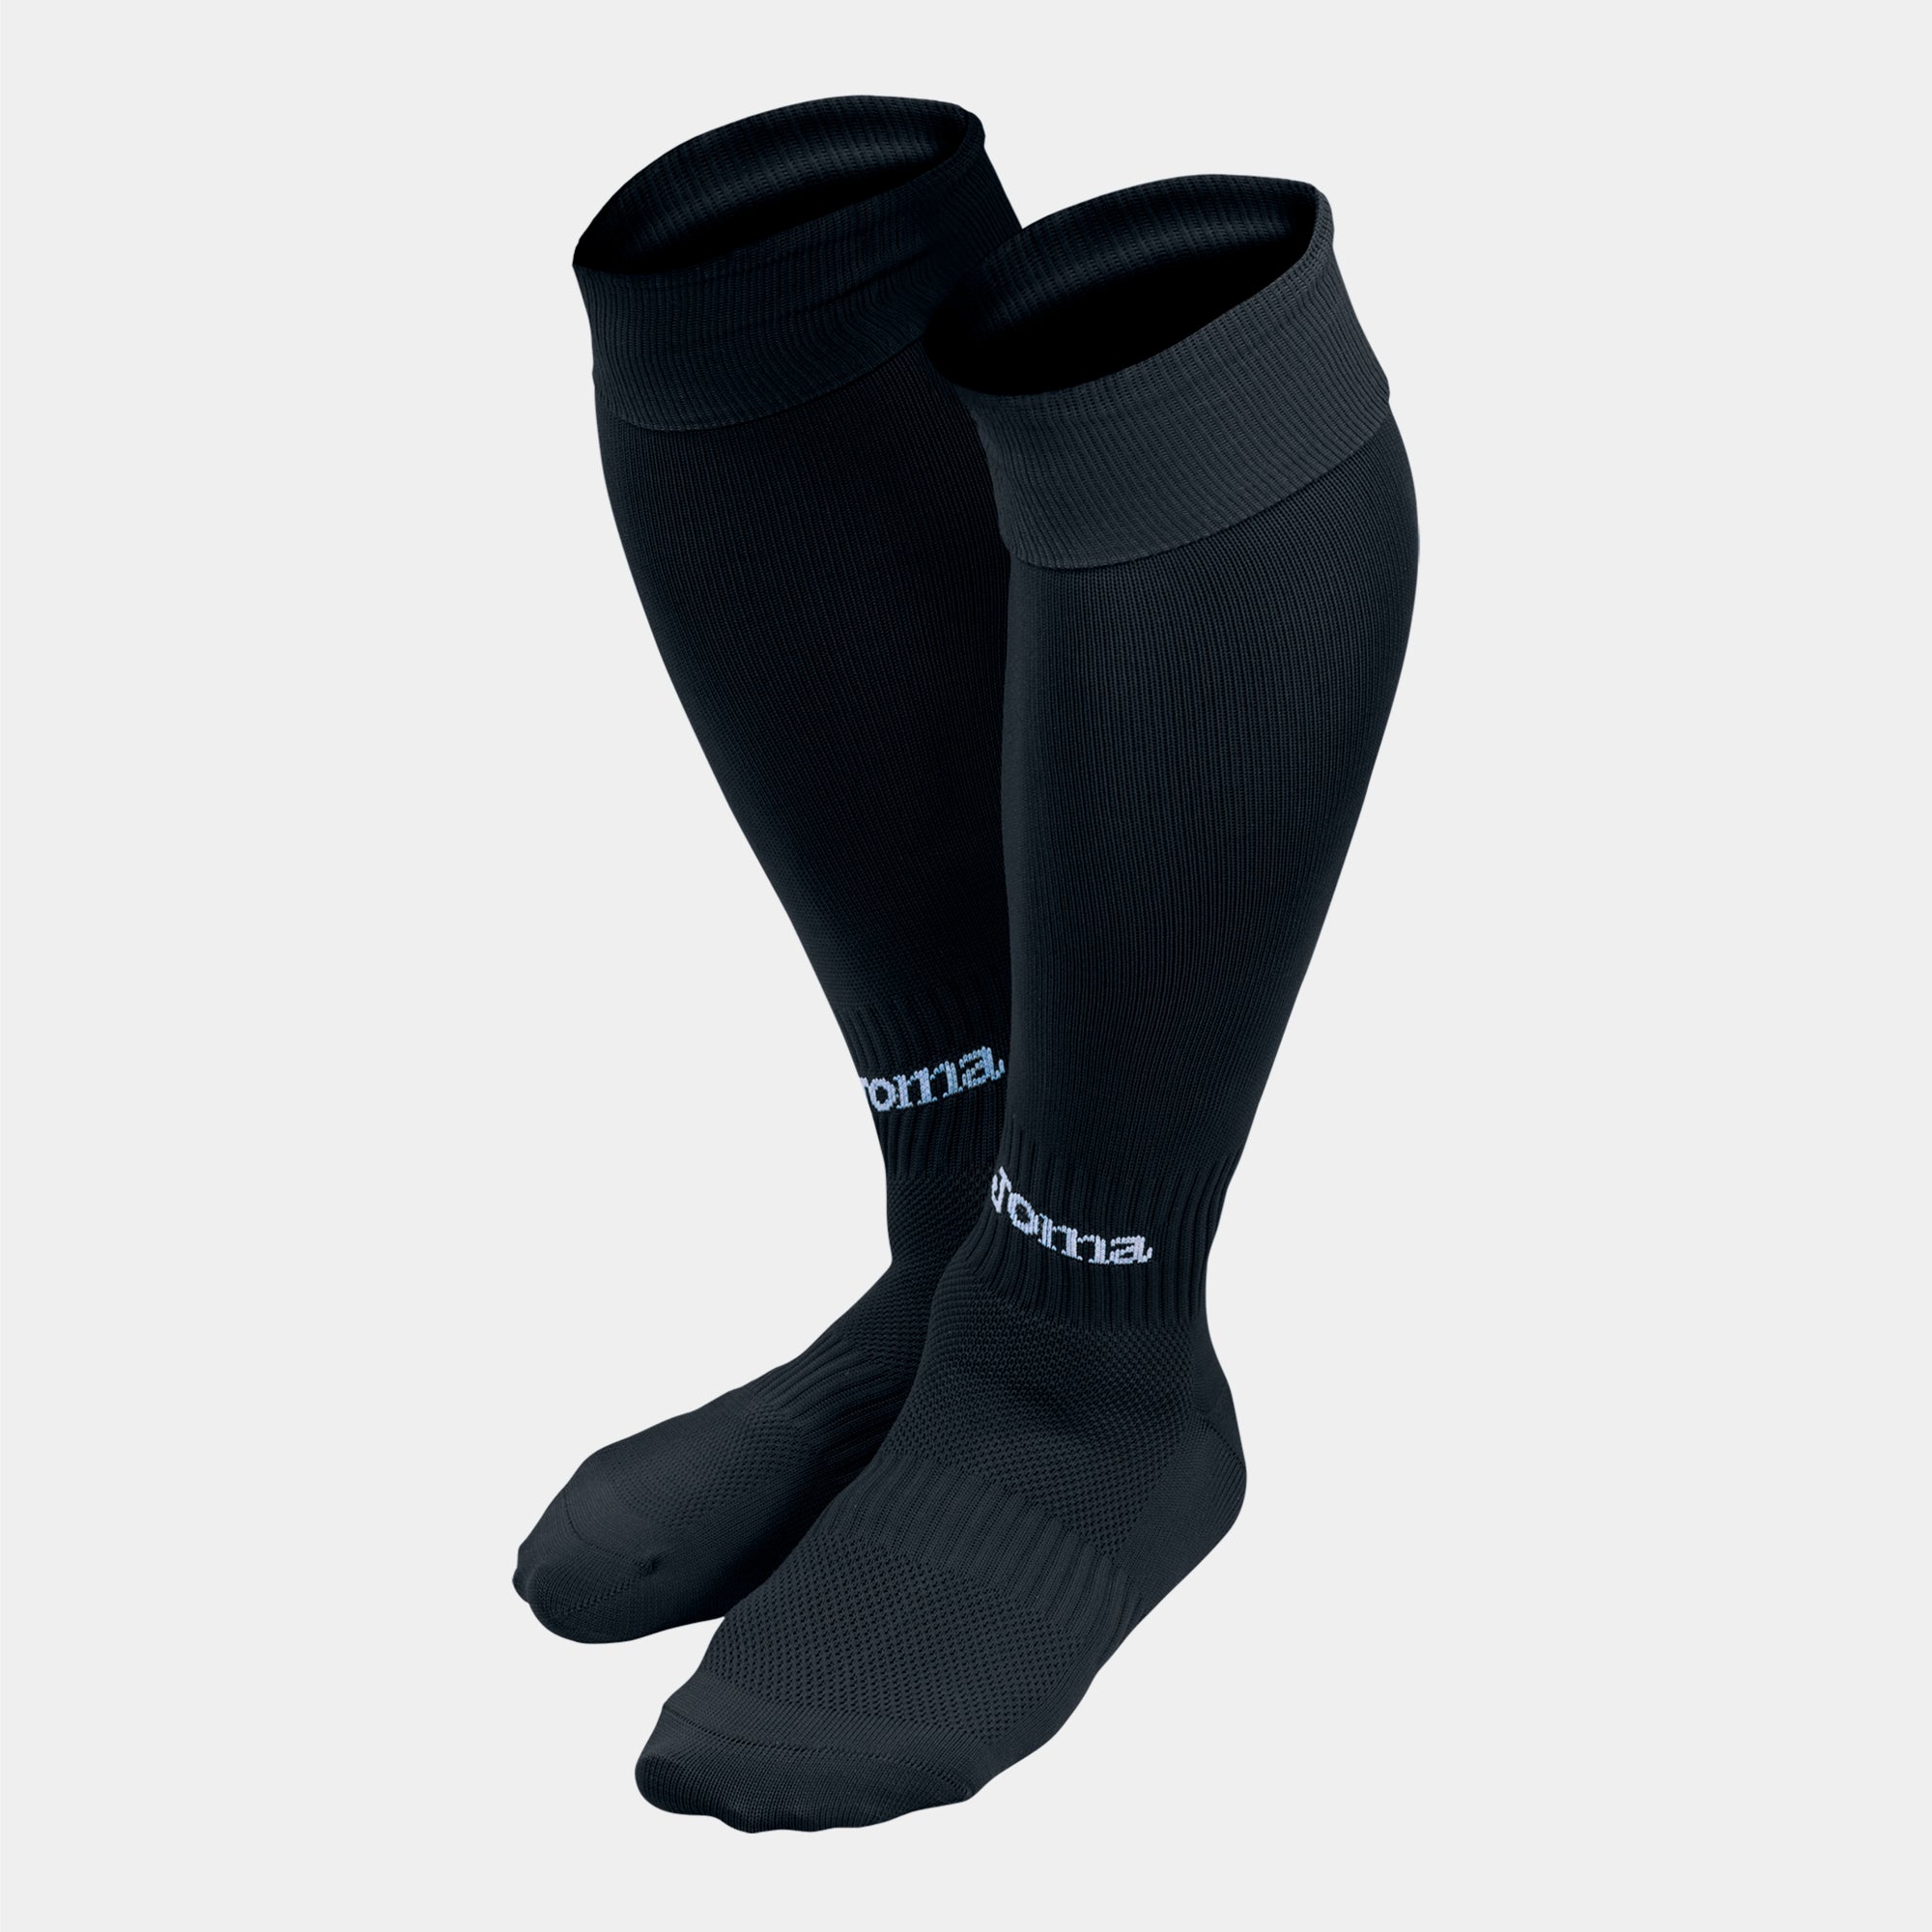 Wimborne - Joma Classic 2 Sock - Black